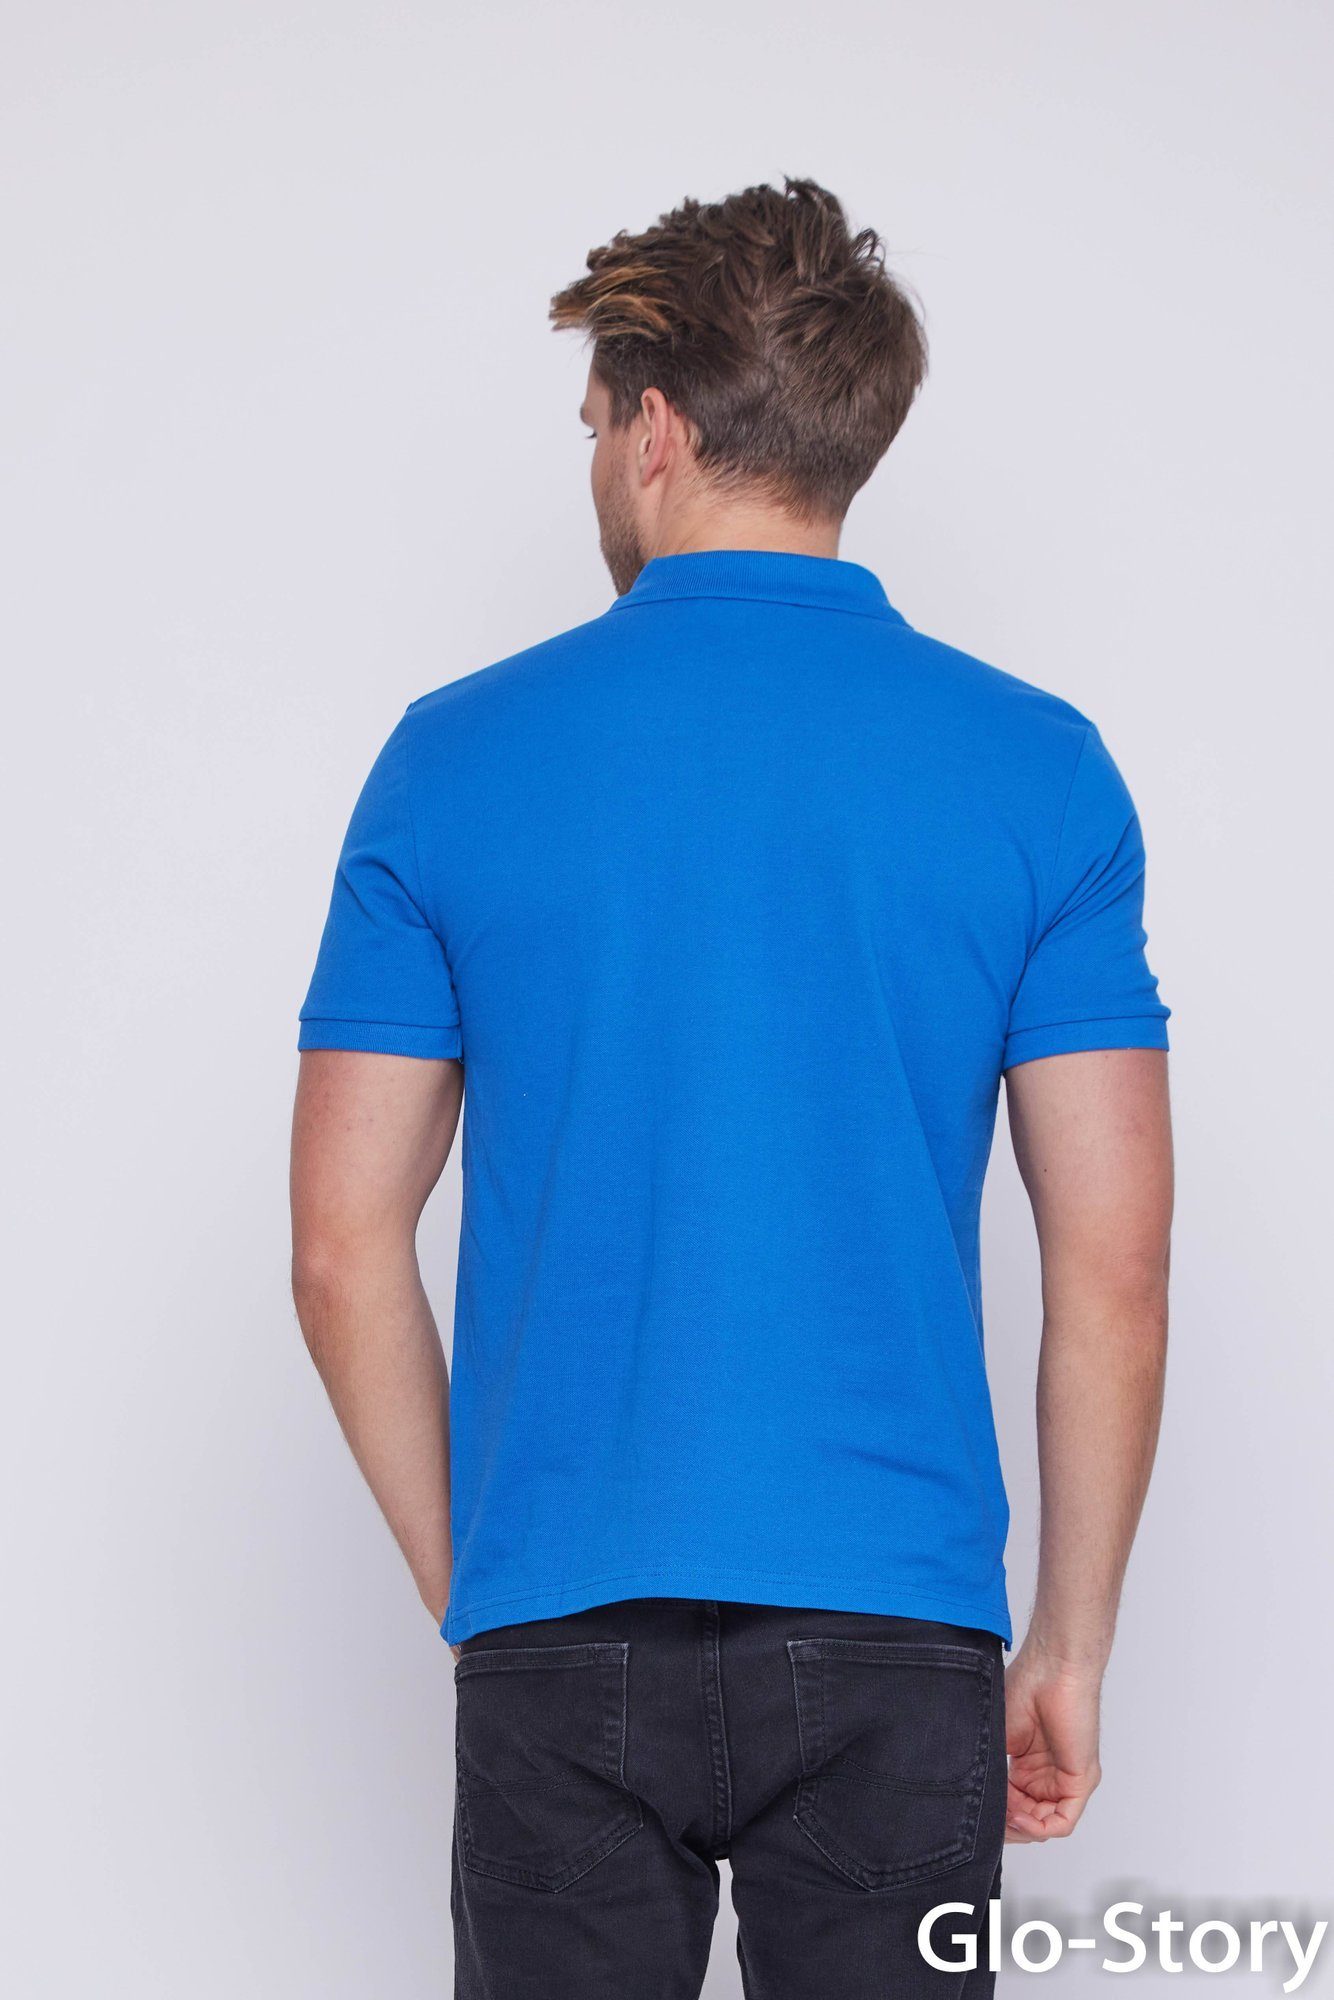 GLO-STORY Poloshirt Herren Kurzarm Basic Sapphire-Blau Regular Polo GLO-STORY Polohemd Poloshirt Shirt